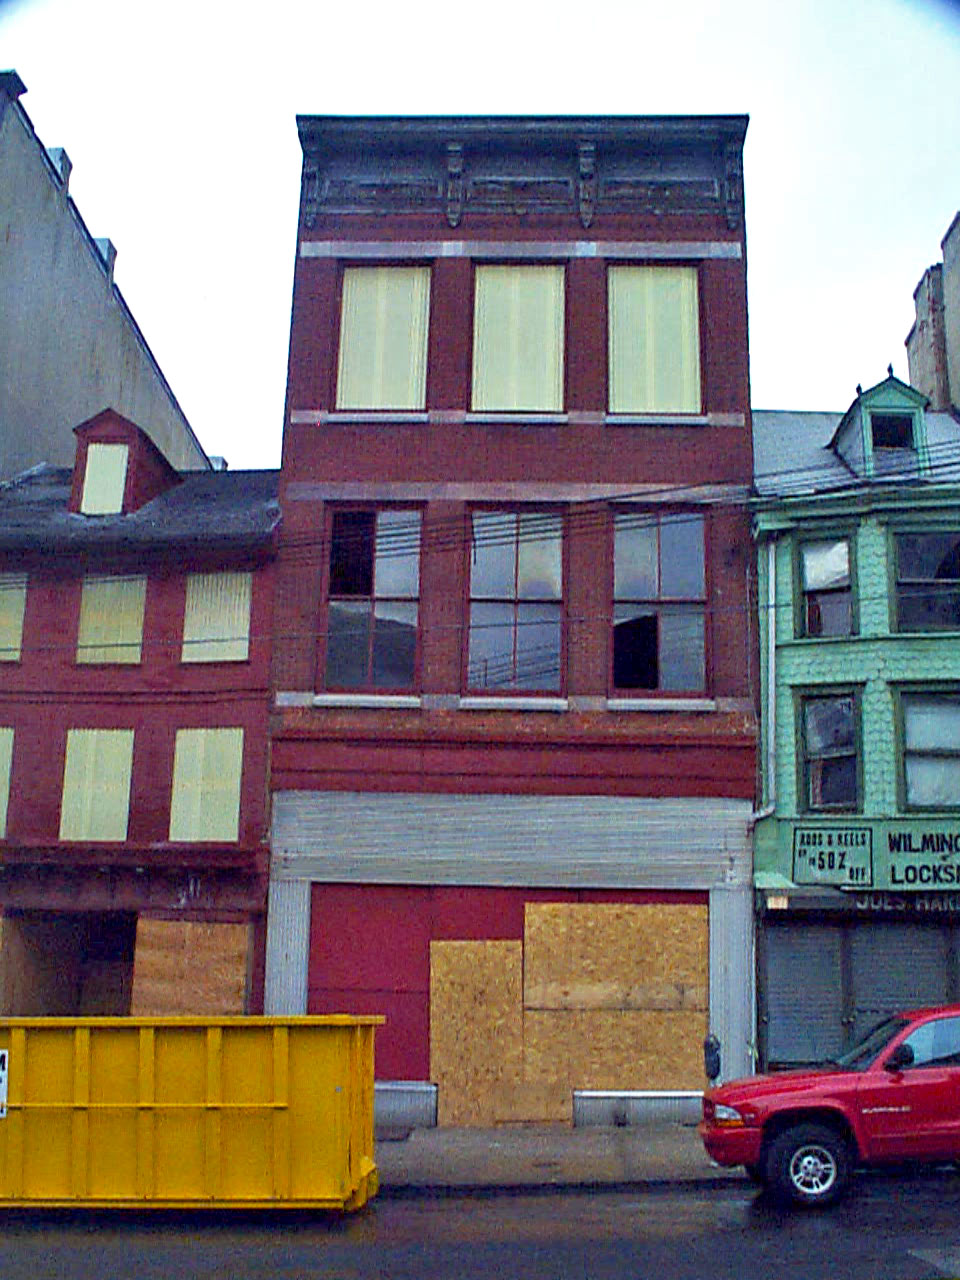 225 Market St facade- before